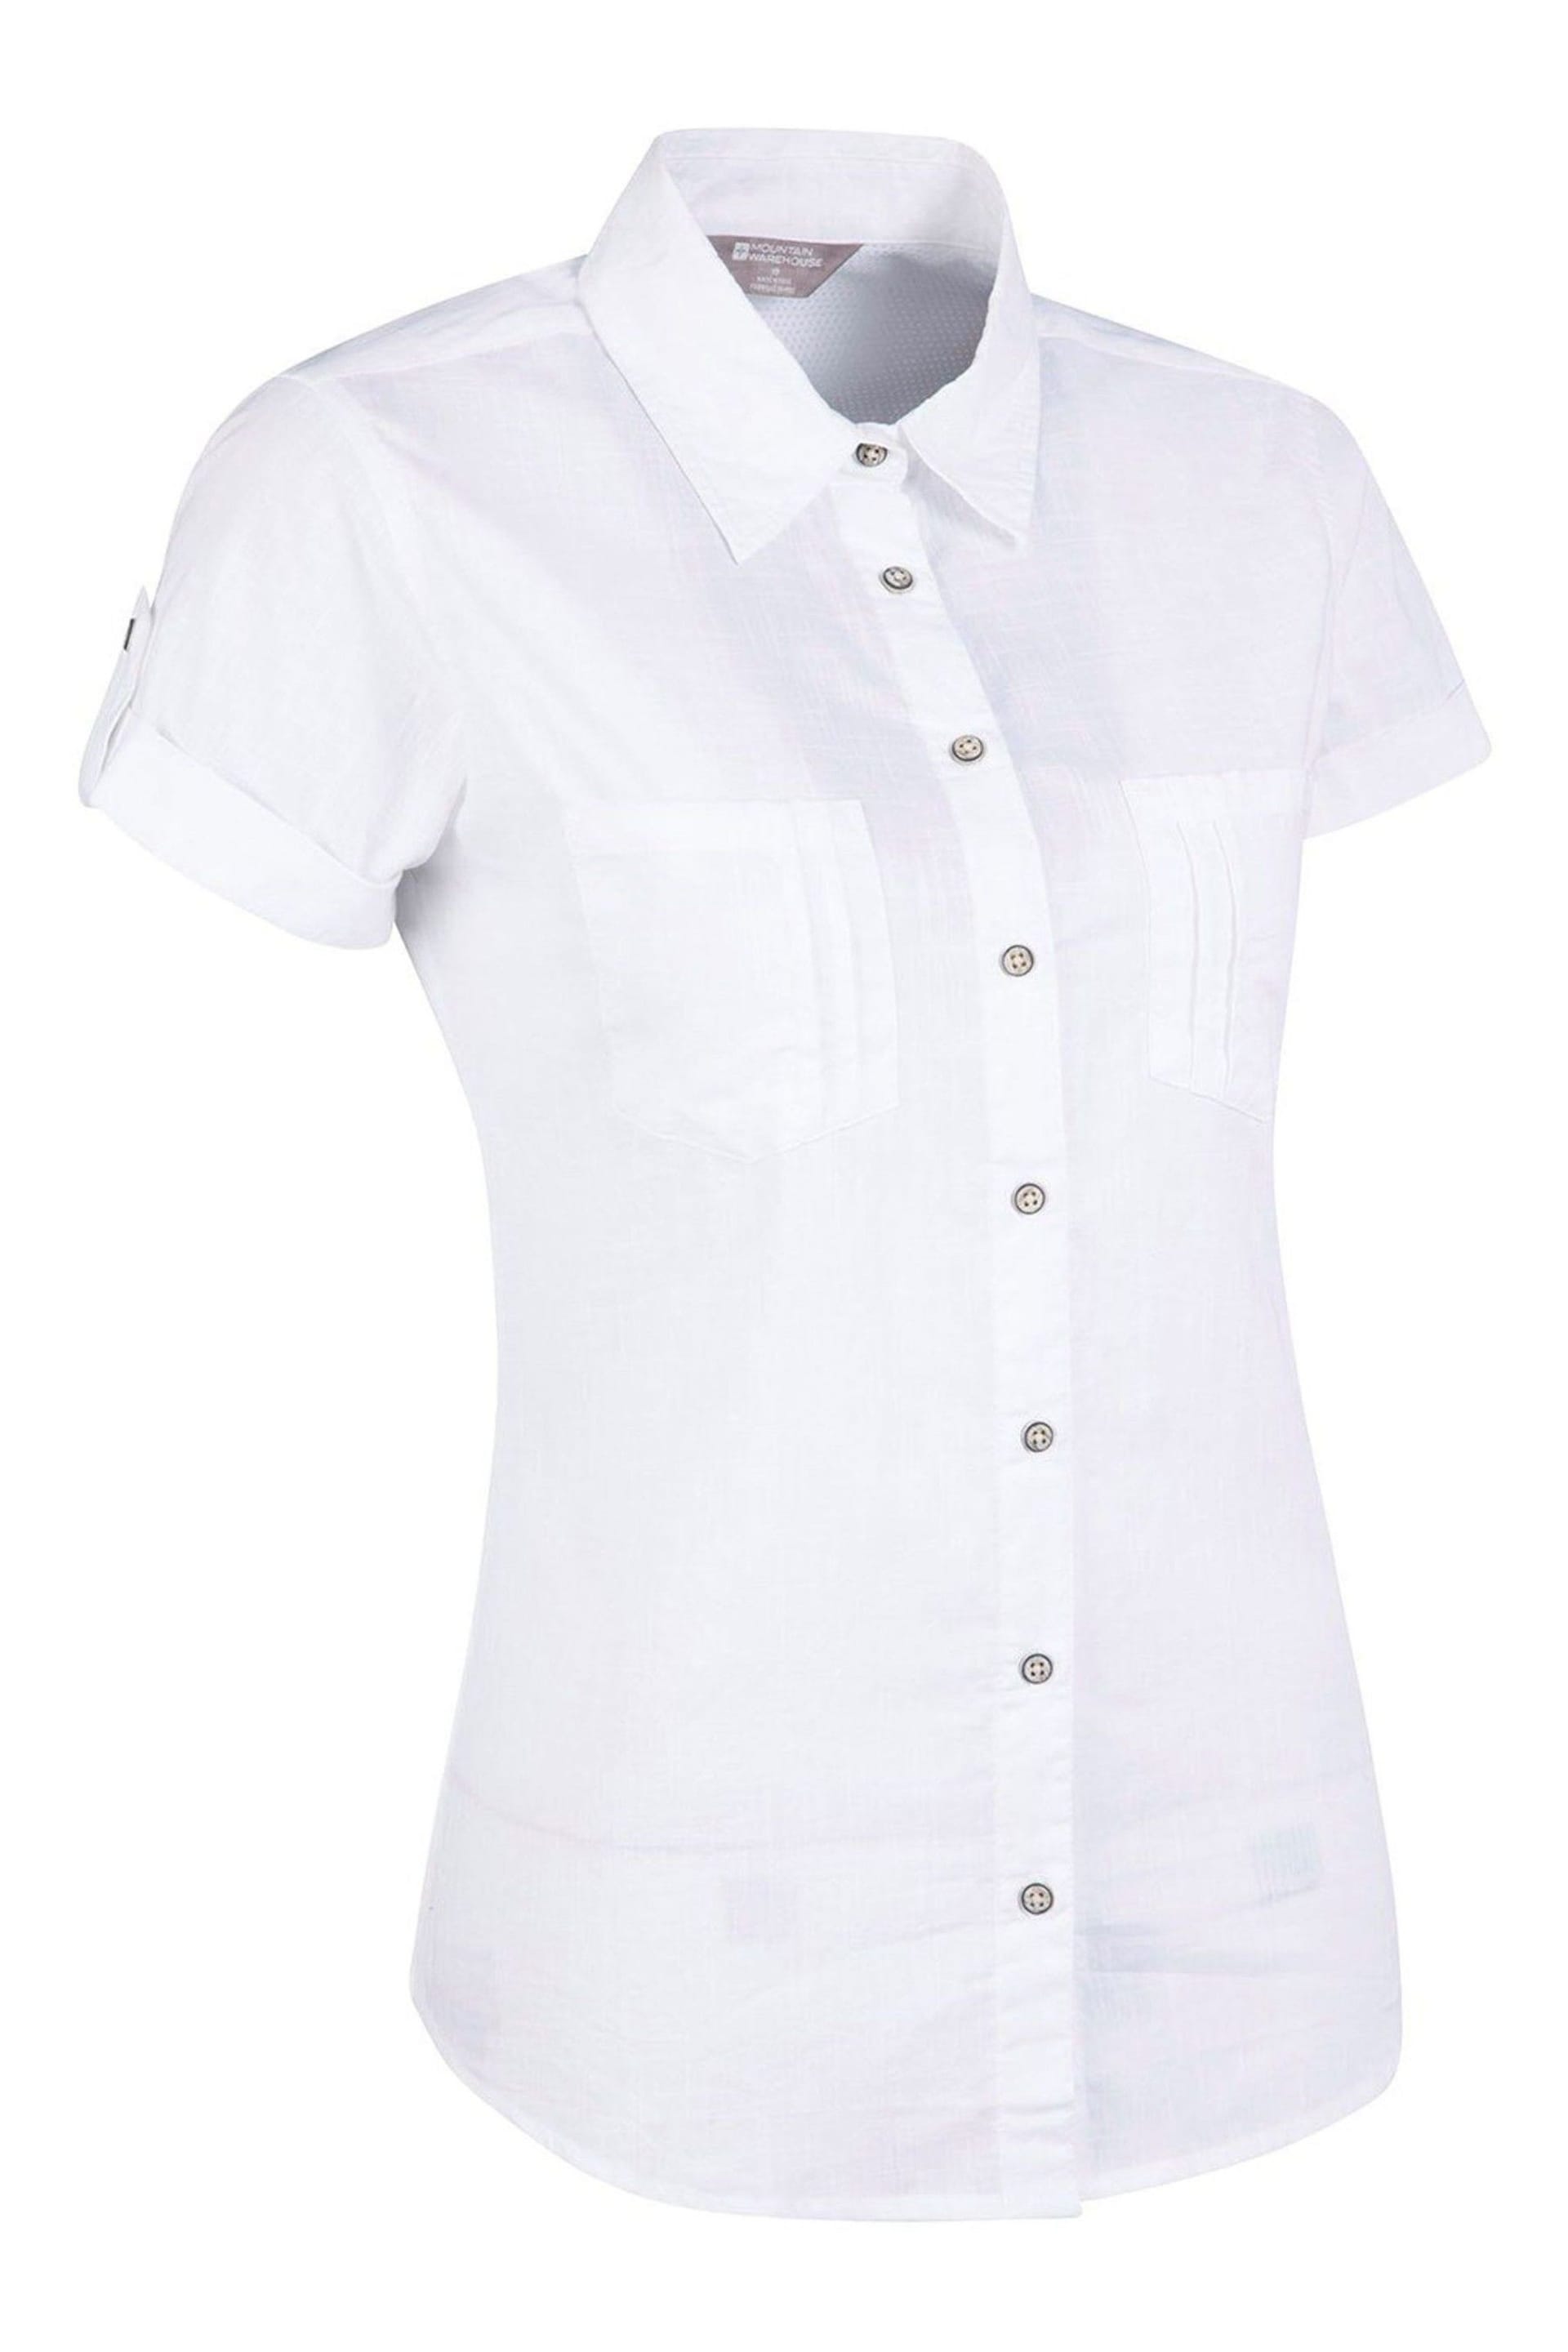 Mountain Warehouse White Coconut Short Sleeve Womens Shirt - Image 2 of 4